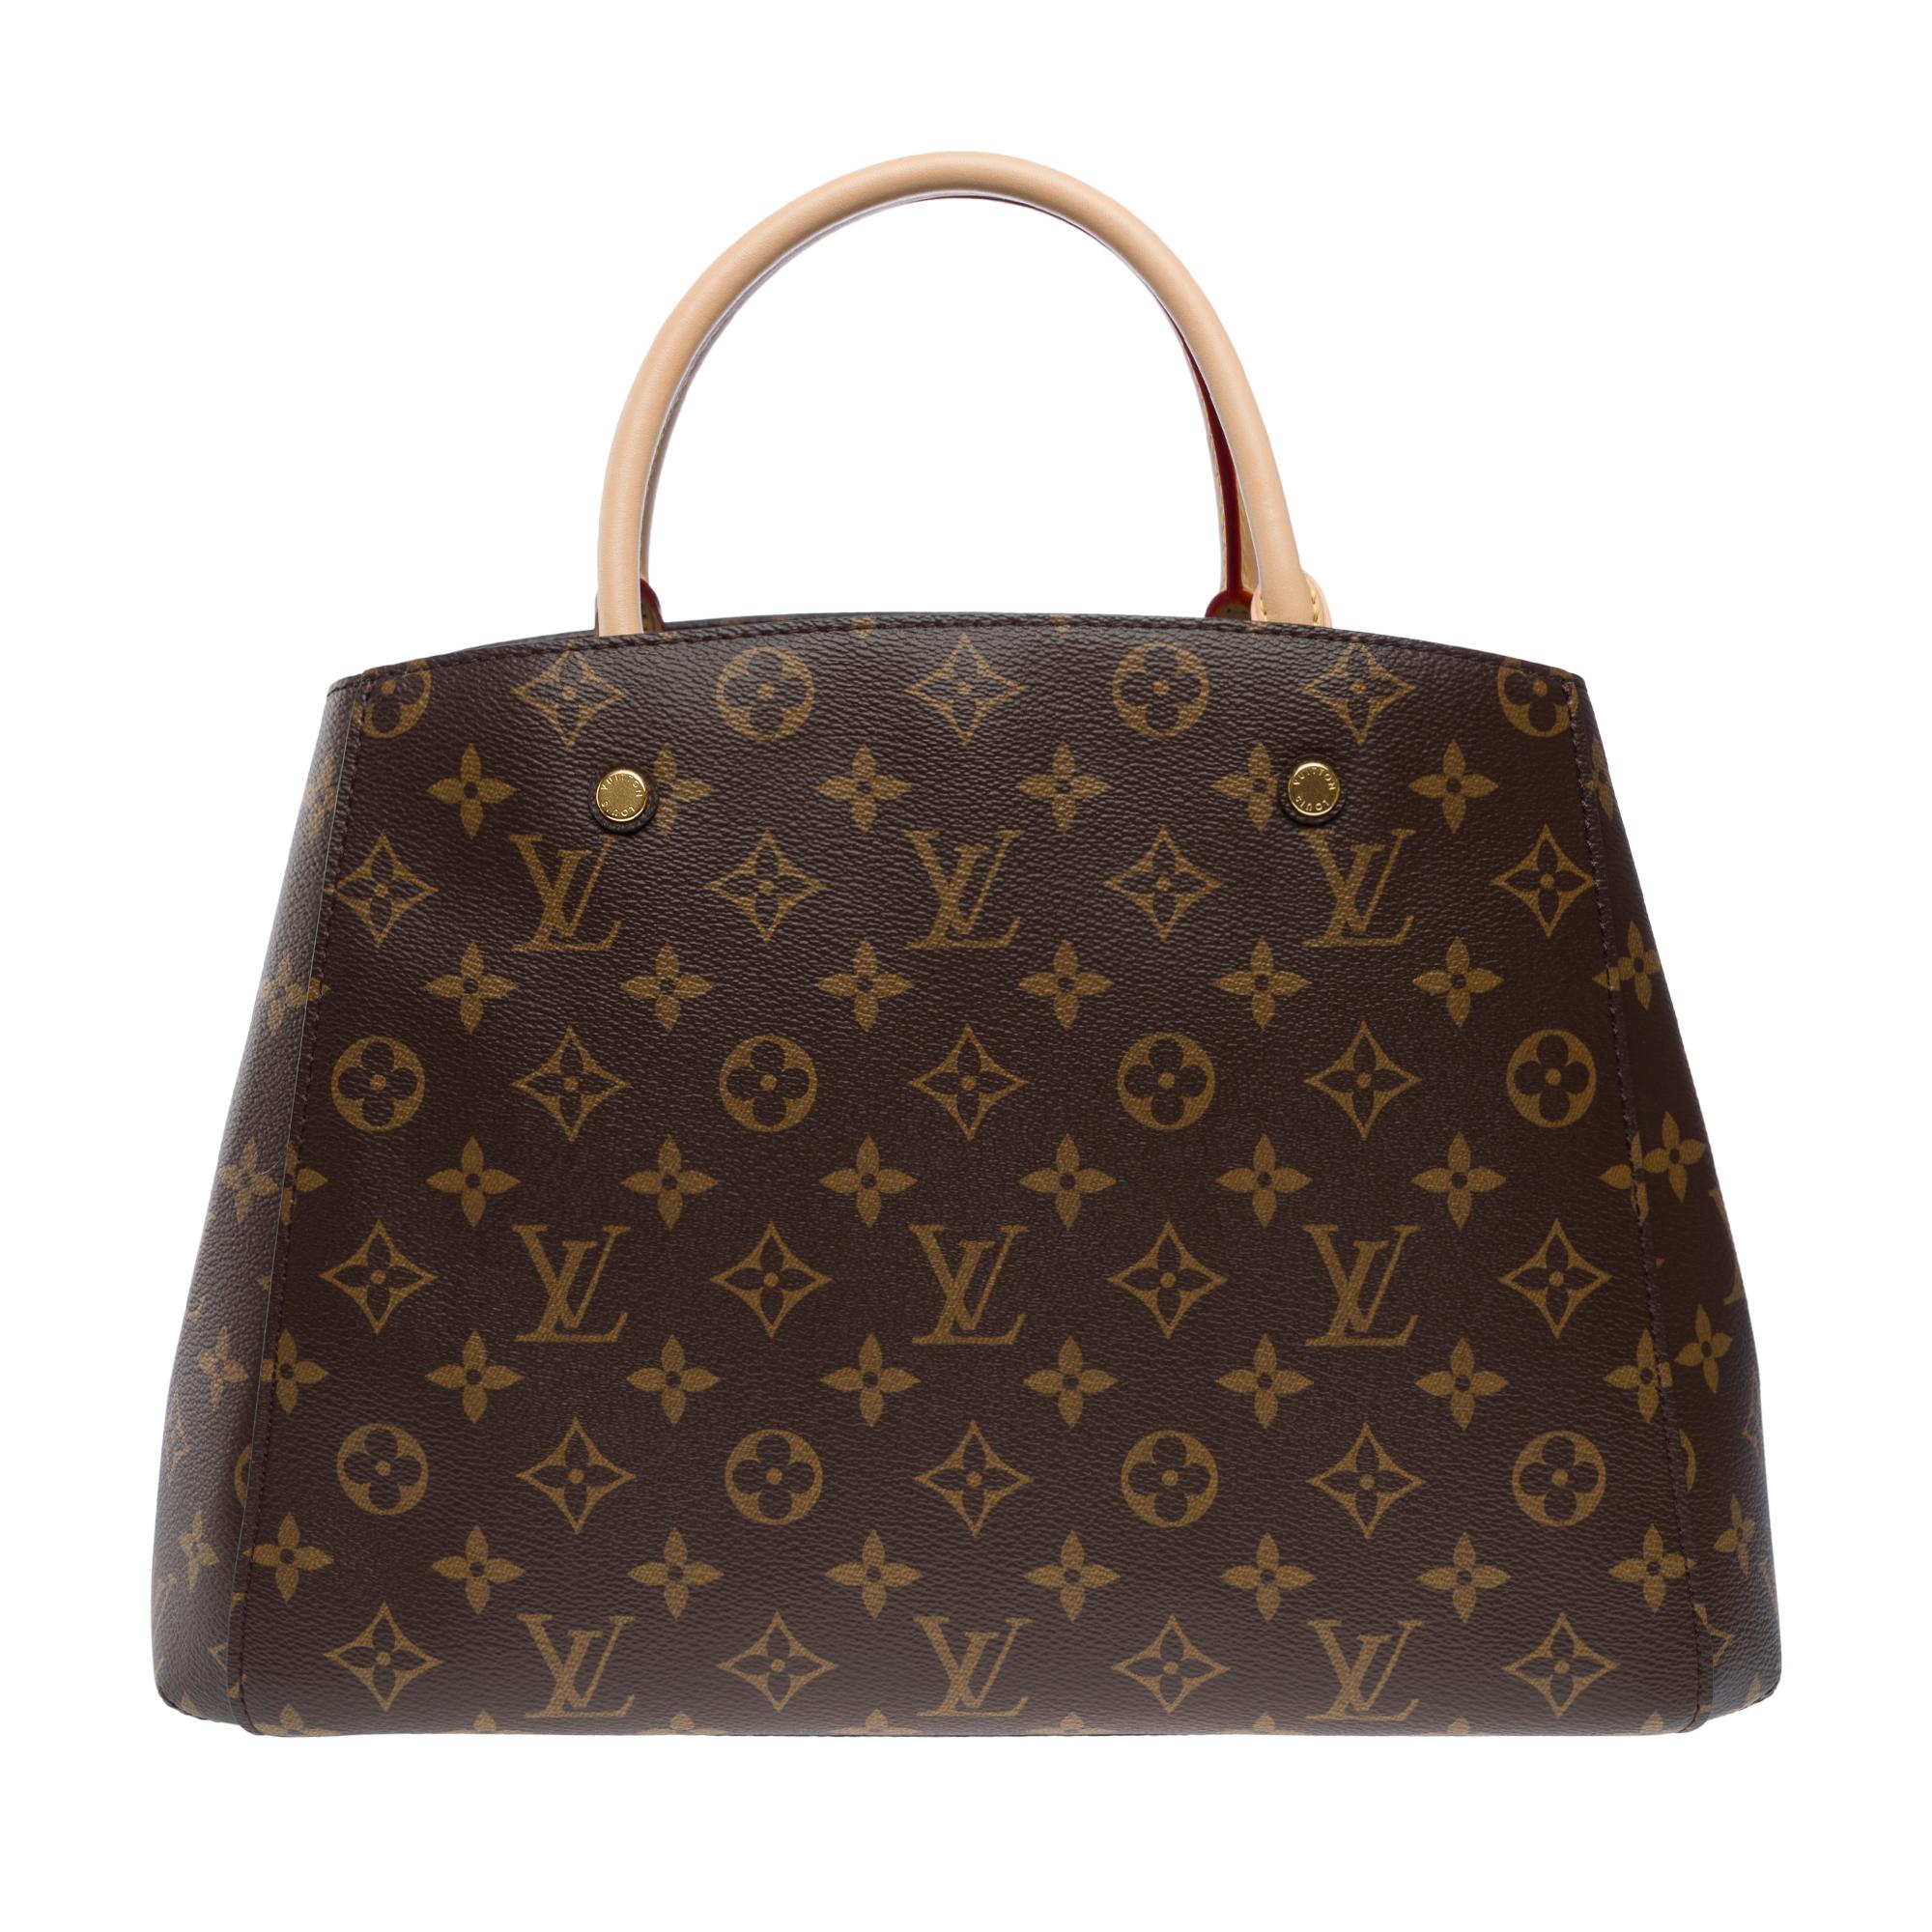 New Louis Vuitton Montaigne MM handbag strap in brown monogram canvas, GHW In New Condition For Sale In Paris, IDF